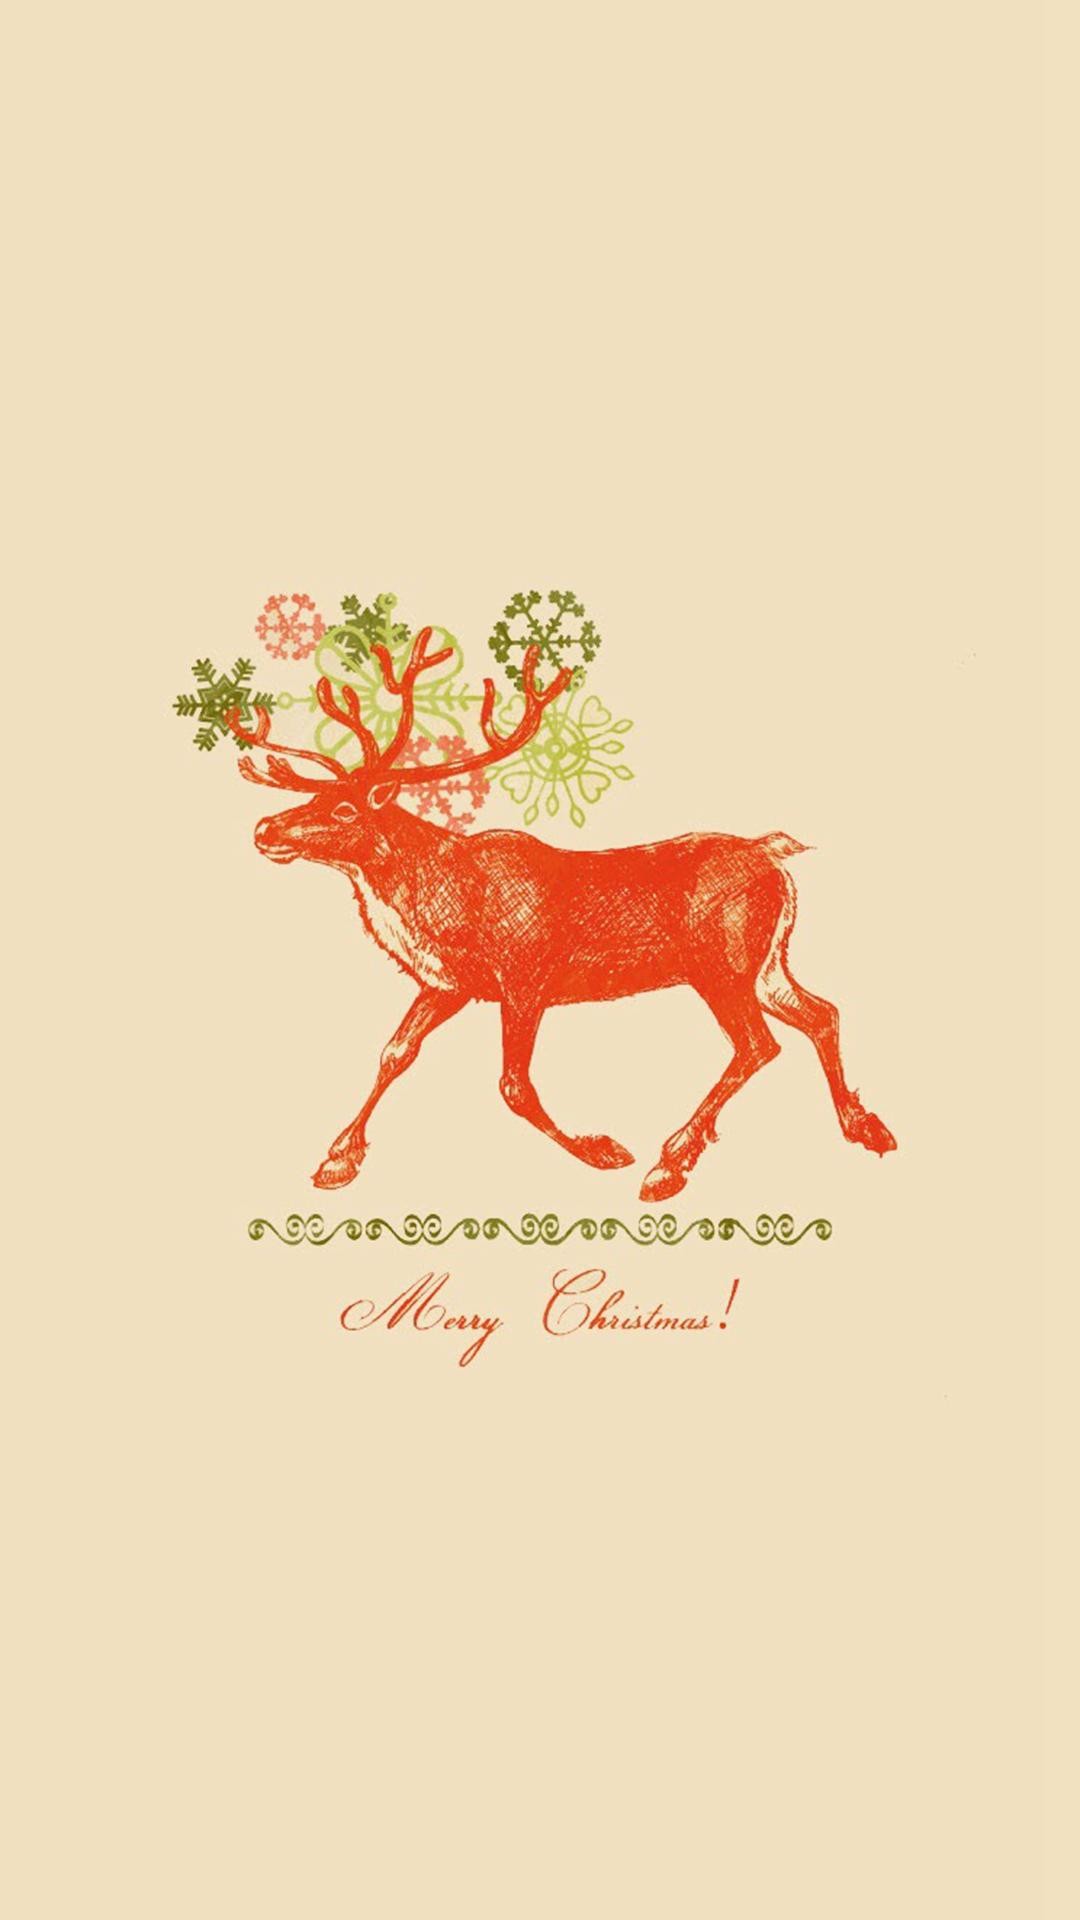 1080x1920 wallpaper.wiki-Merry-Christmas-Vintage-Reindeer-Illustration-iPhone-